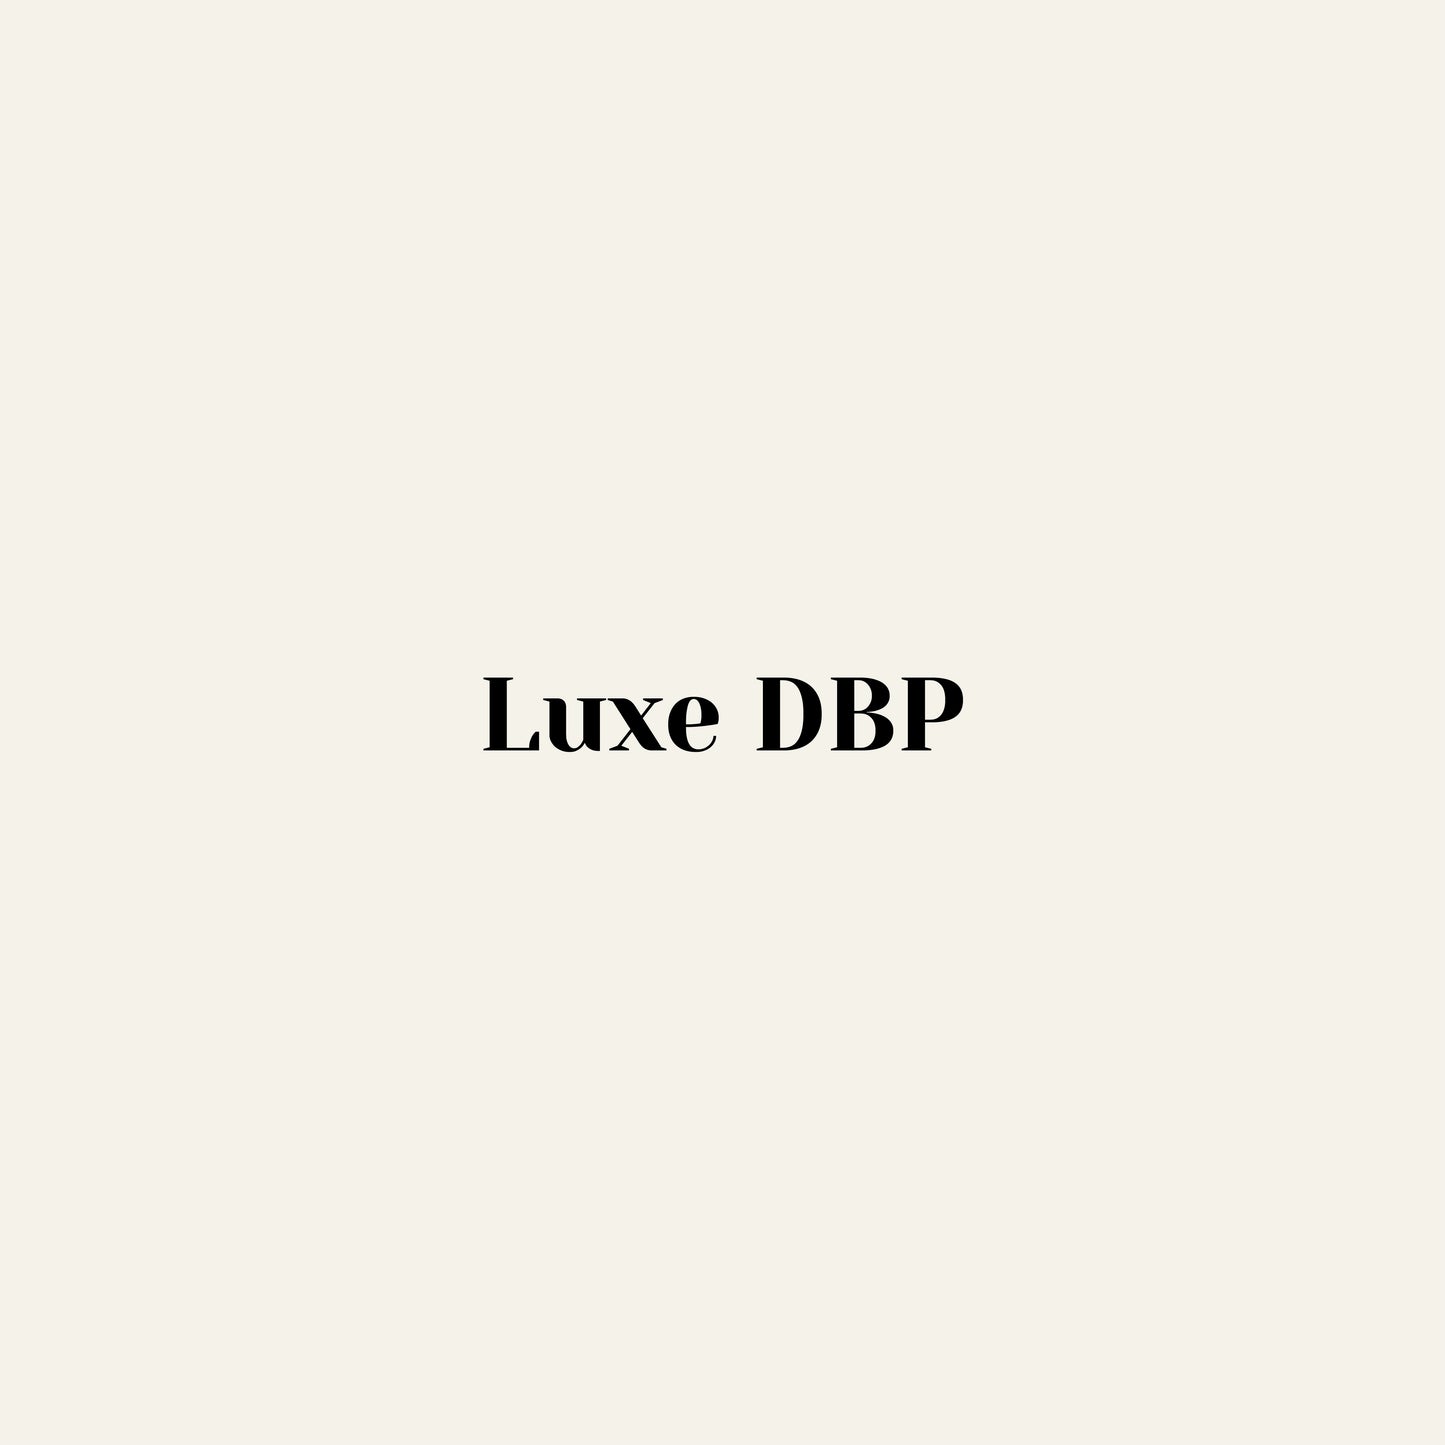 Custom LUXE DBP